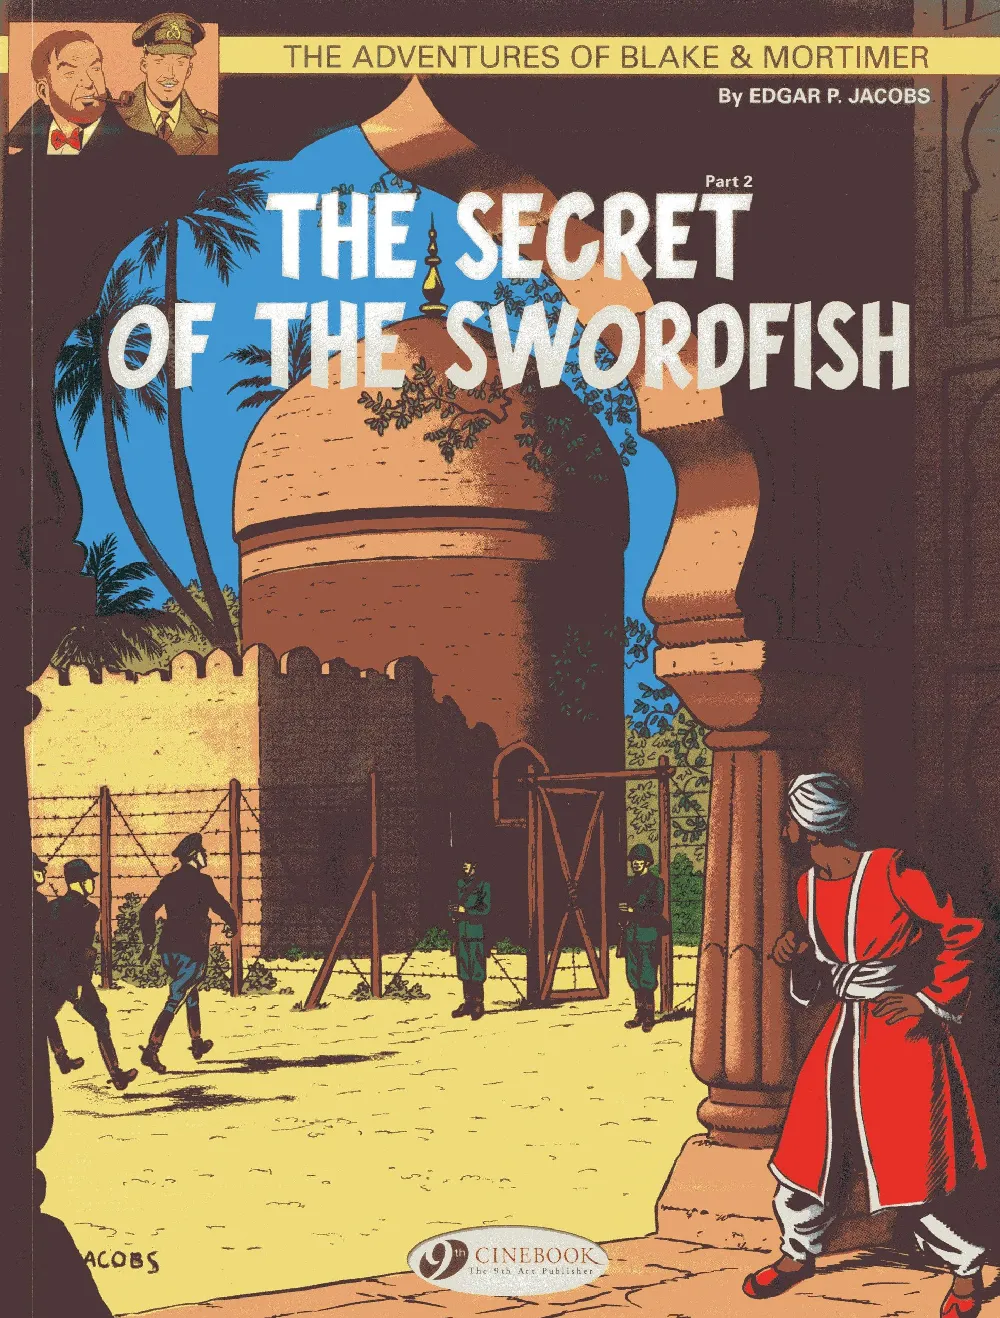 The Secret of the Swordfish - Part 2